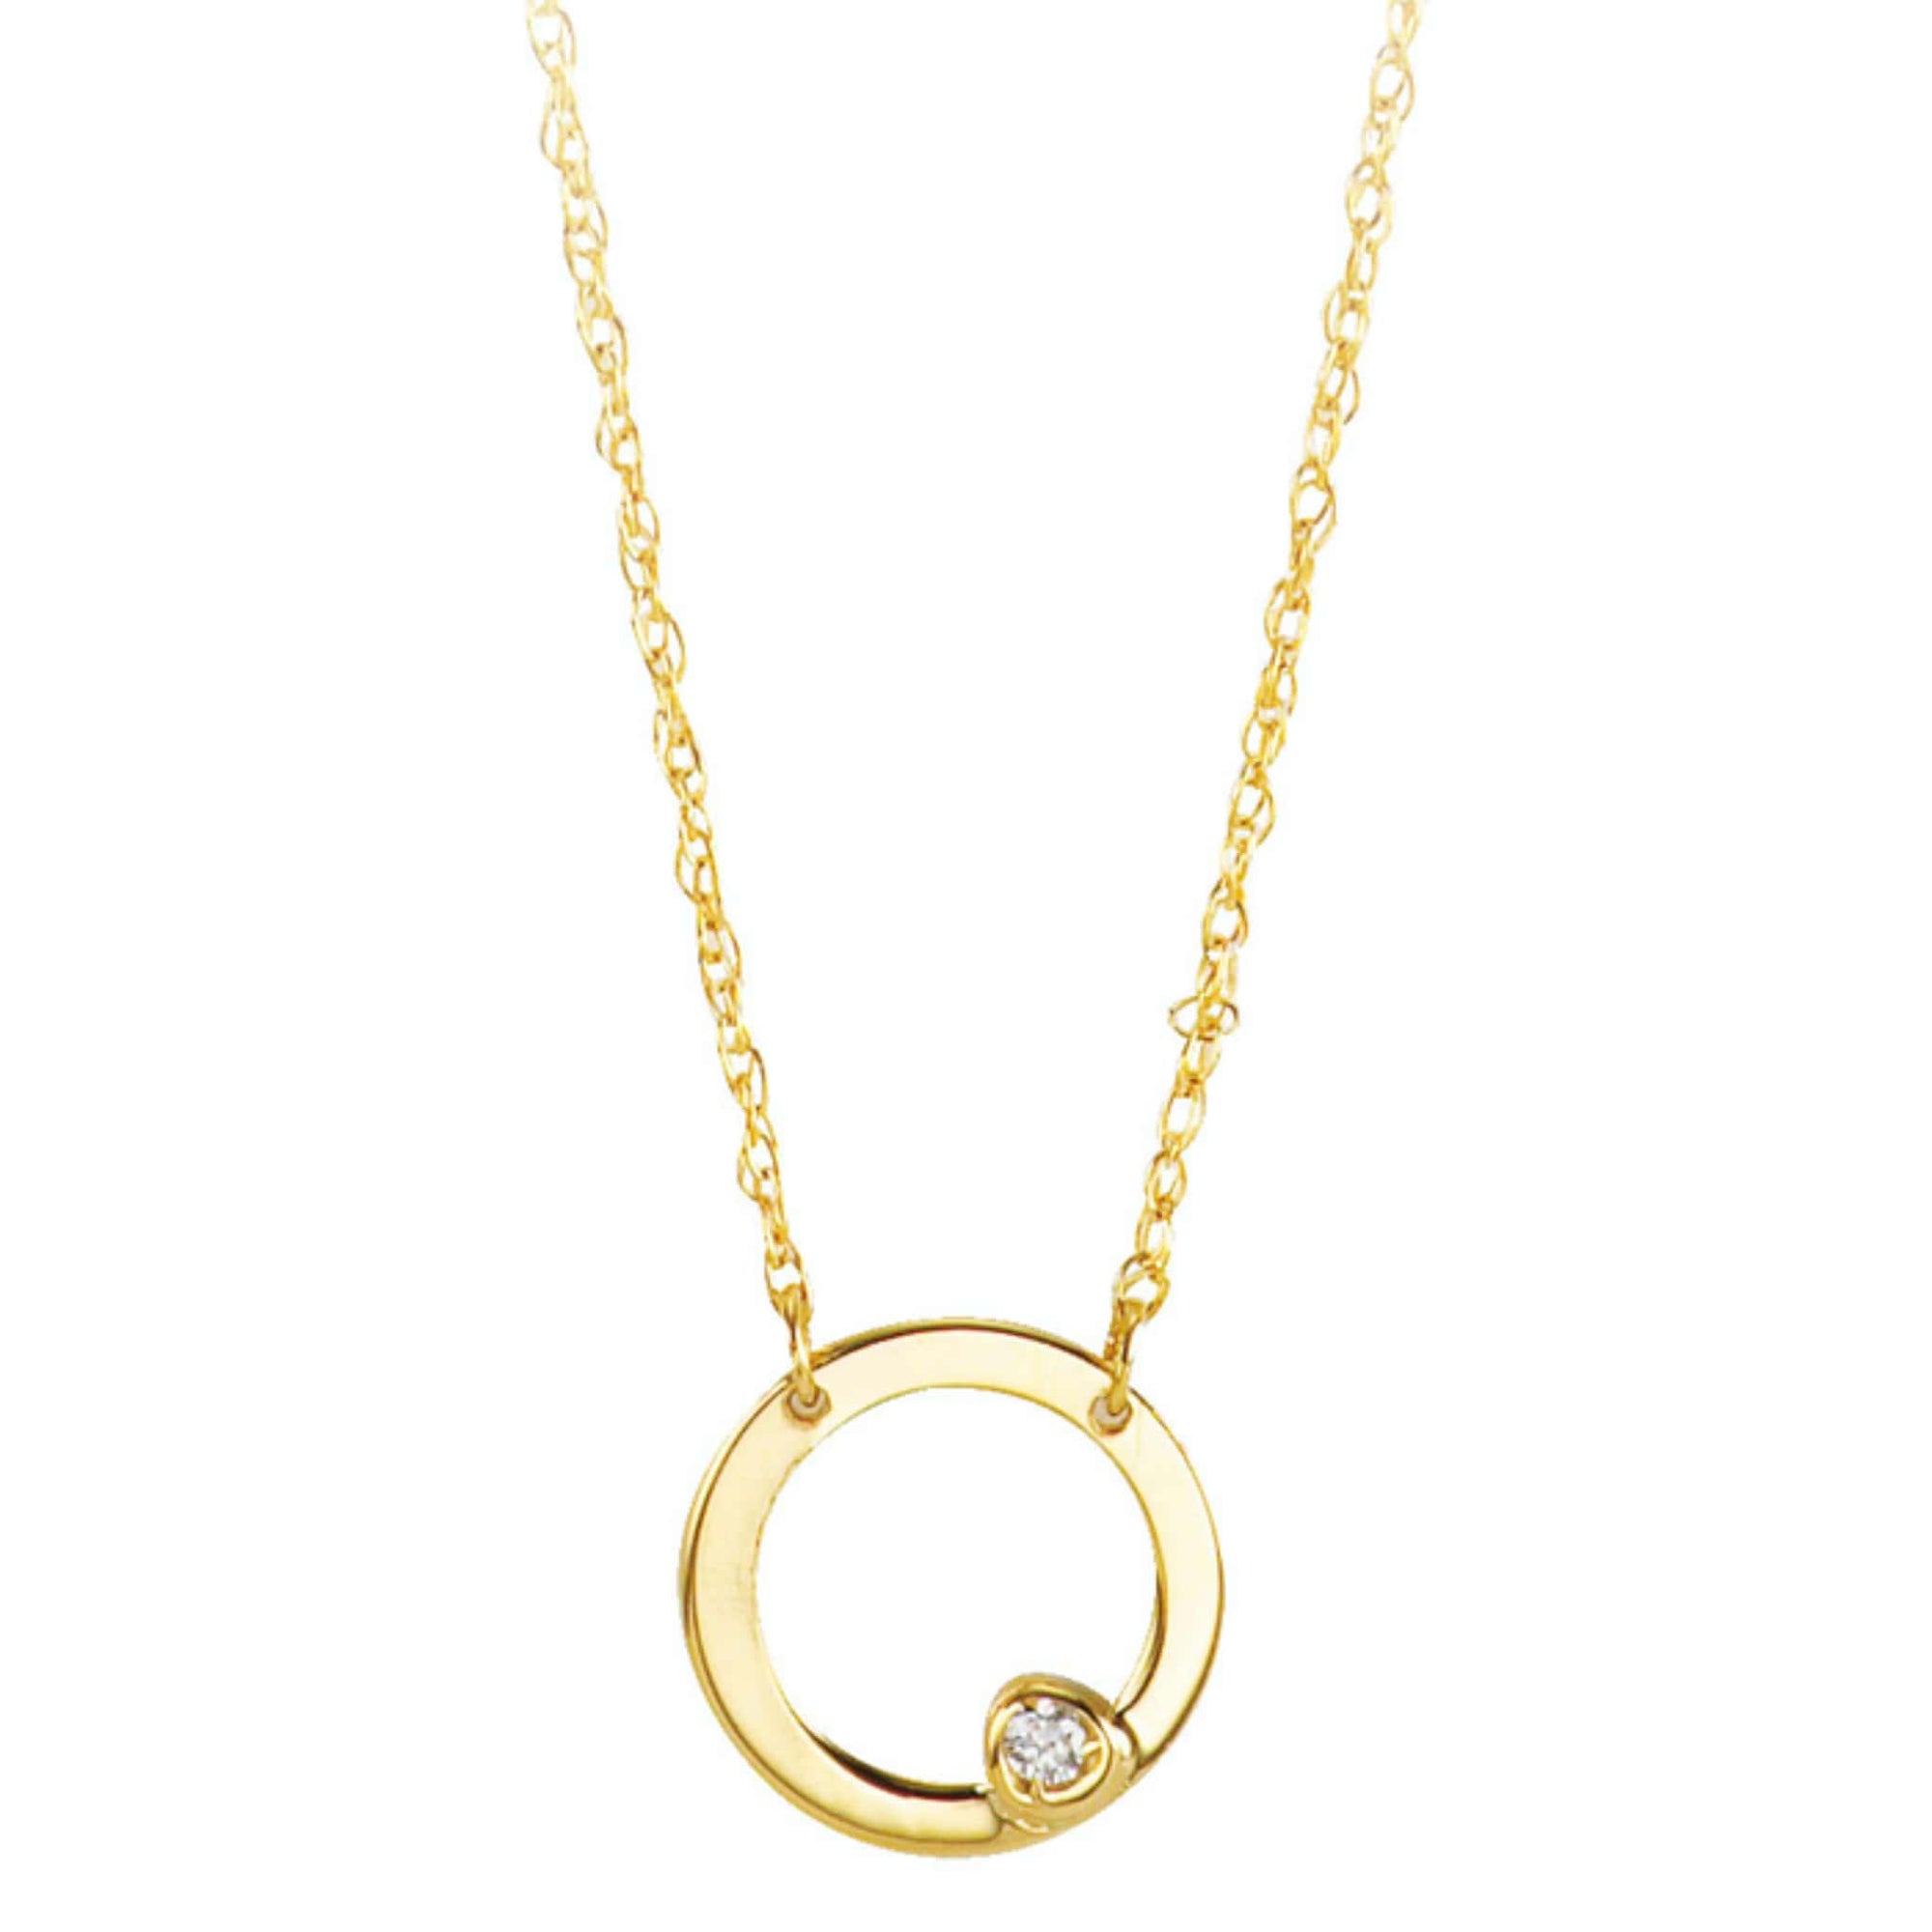 10k Yellow Gold Diamond Circle Necklace at Arman's Jewellers Kitchener-Waterloo